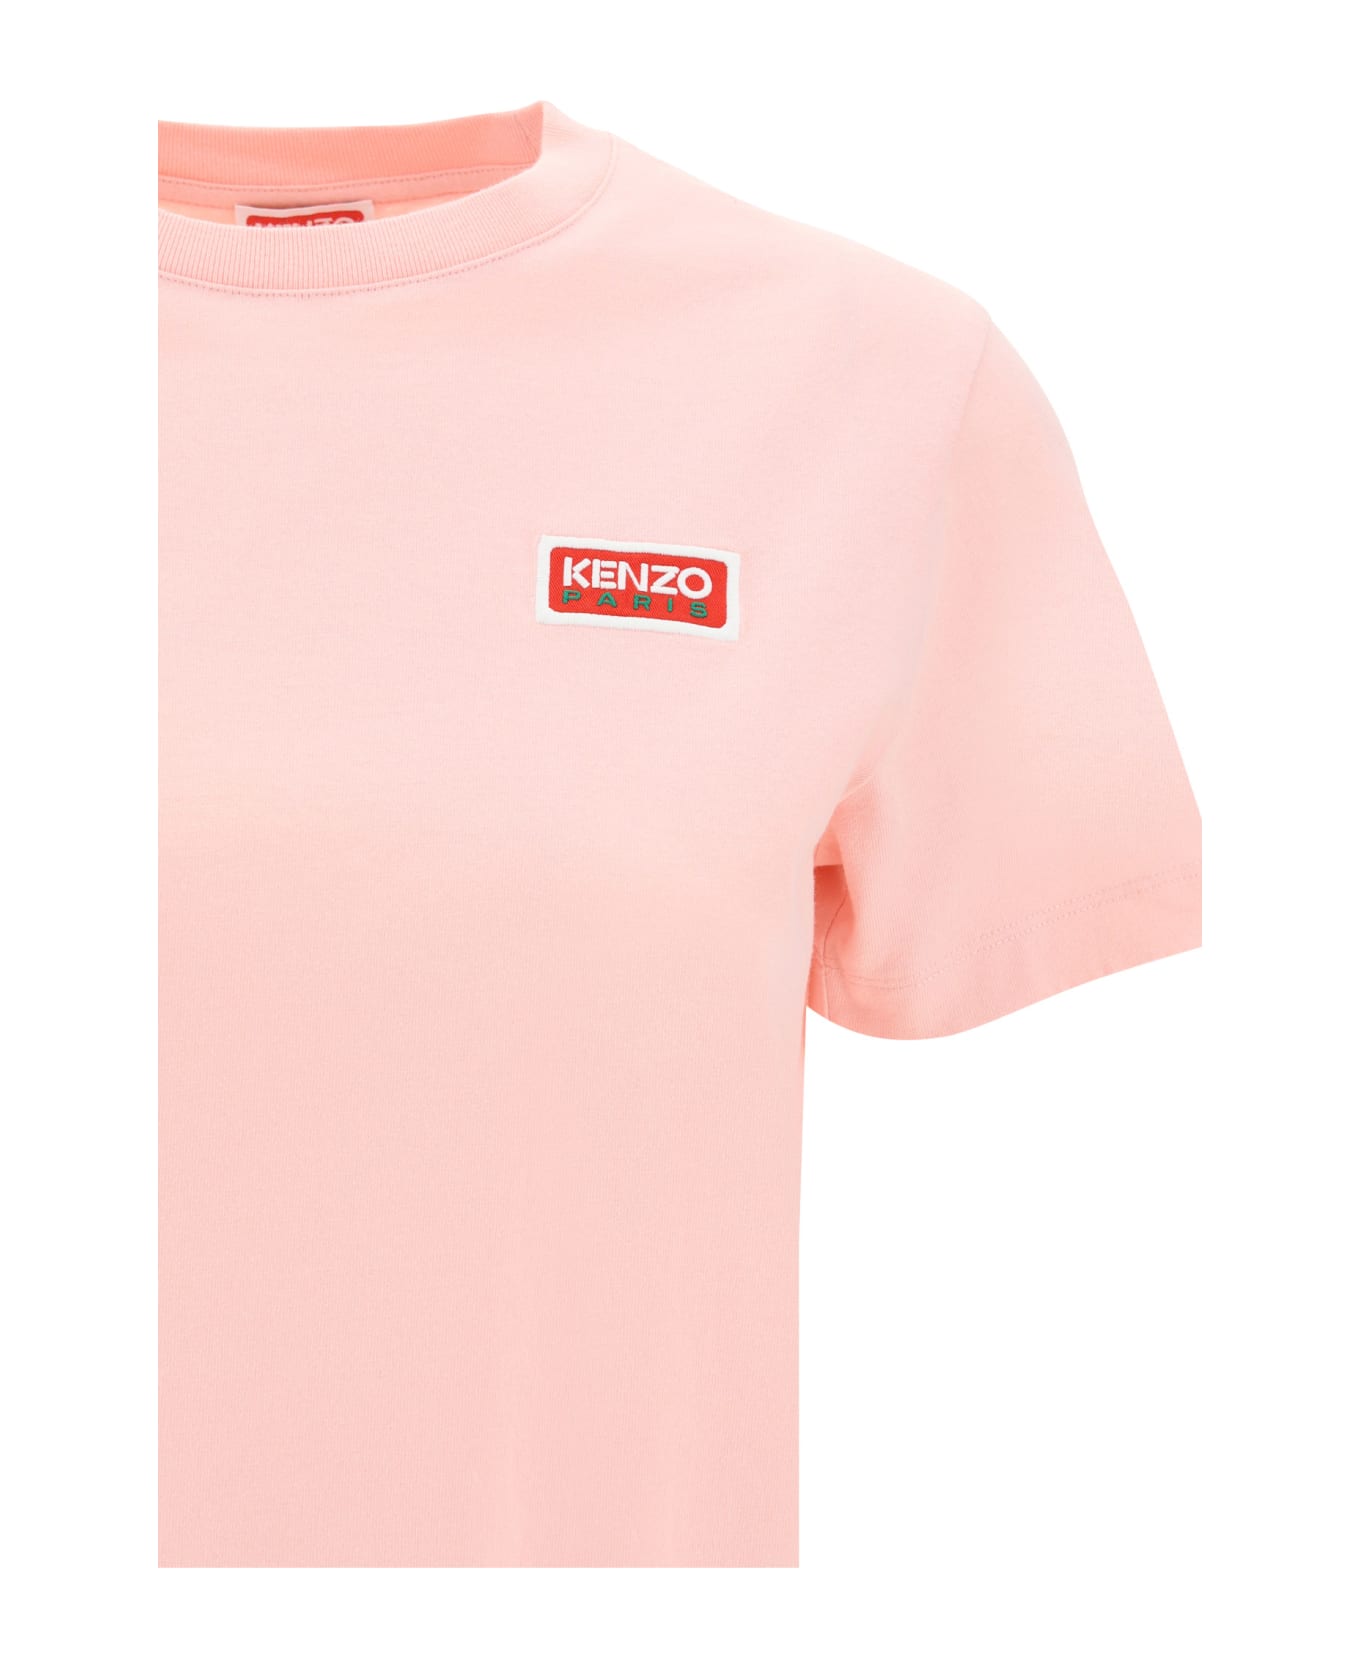 Kenzo Paris T-shirt - Rose Clair Tシャツ